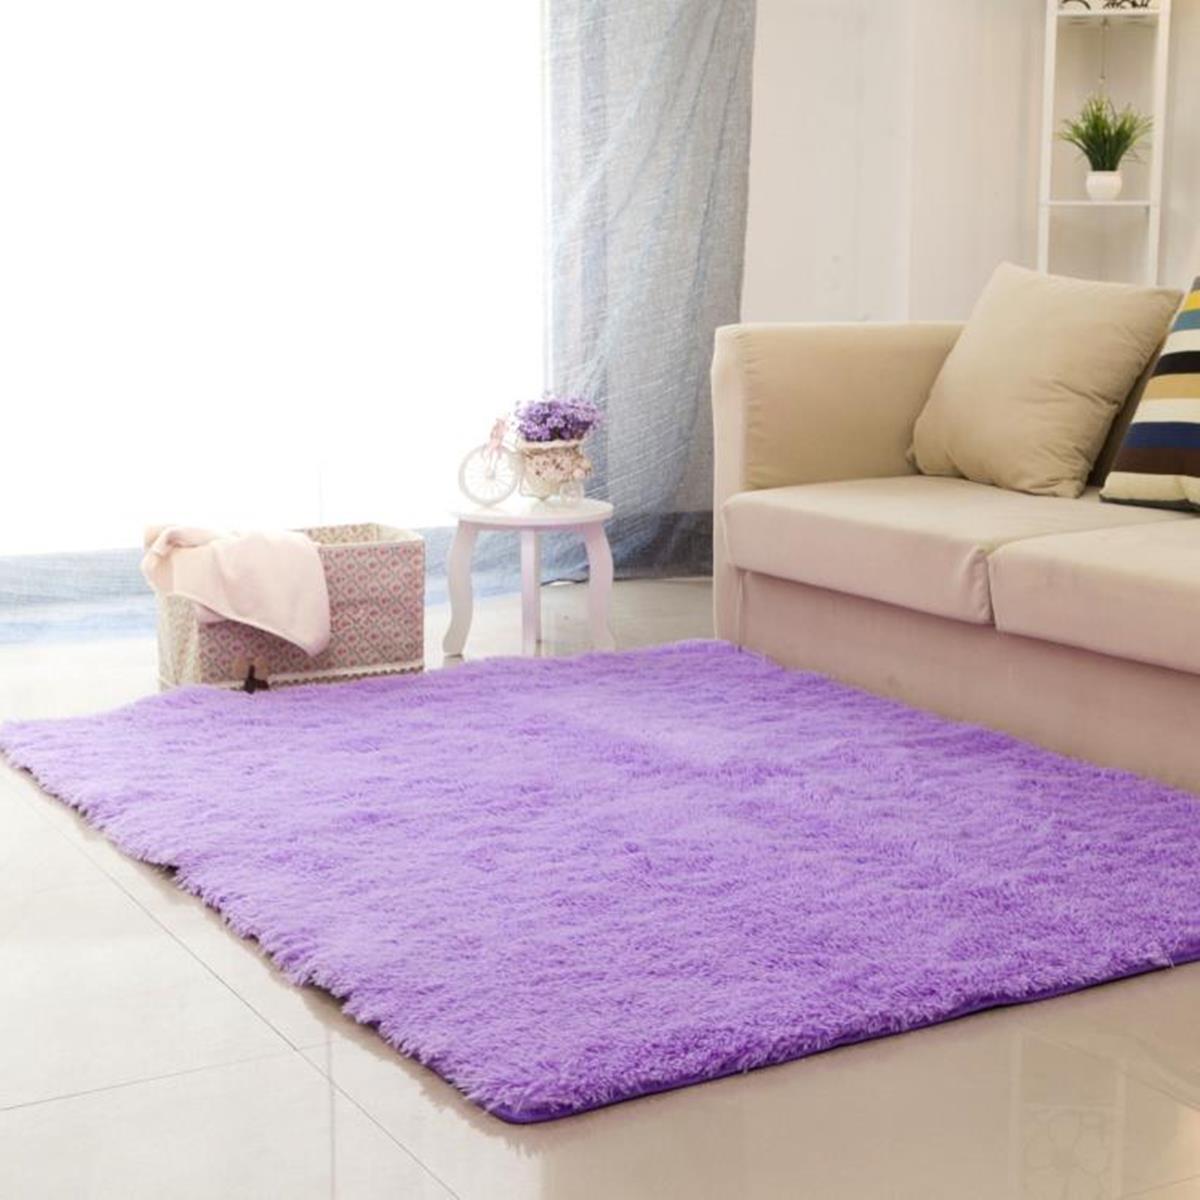 80cm-x-160cm-Purple-Soft-Fluffy-Anti-Skid-Shaggy-Area-Rug-Living-Room-Home-Carpet-Floor-Mat-1140518-1